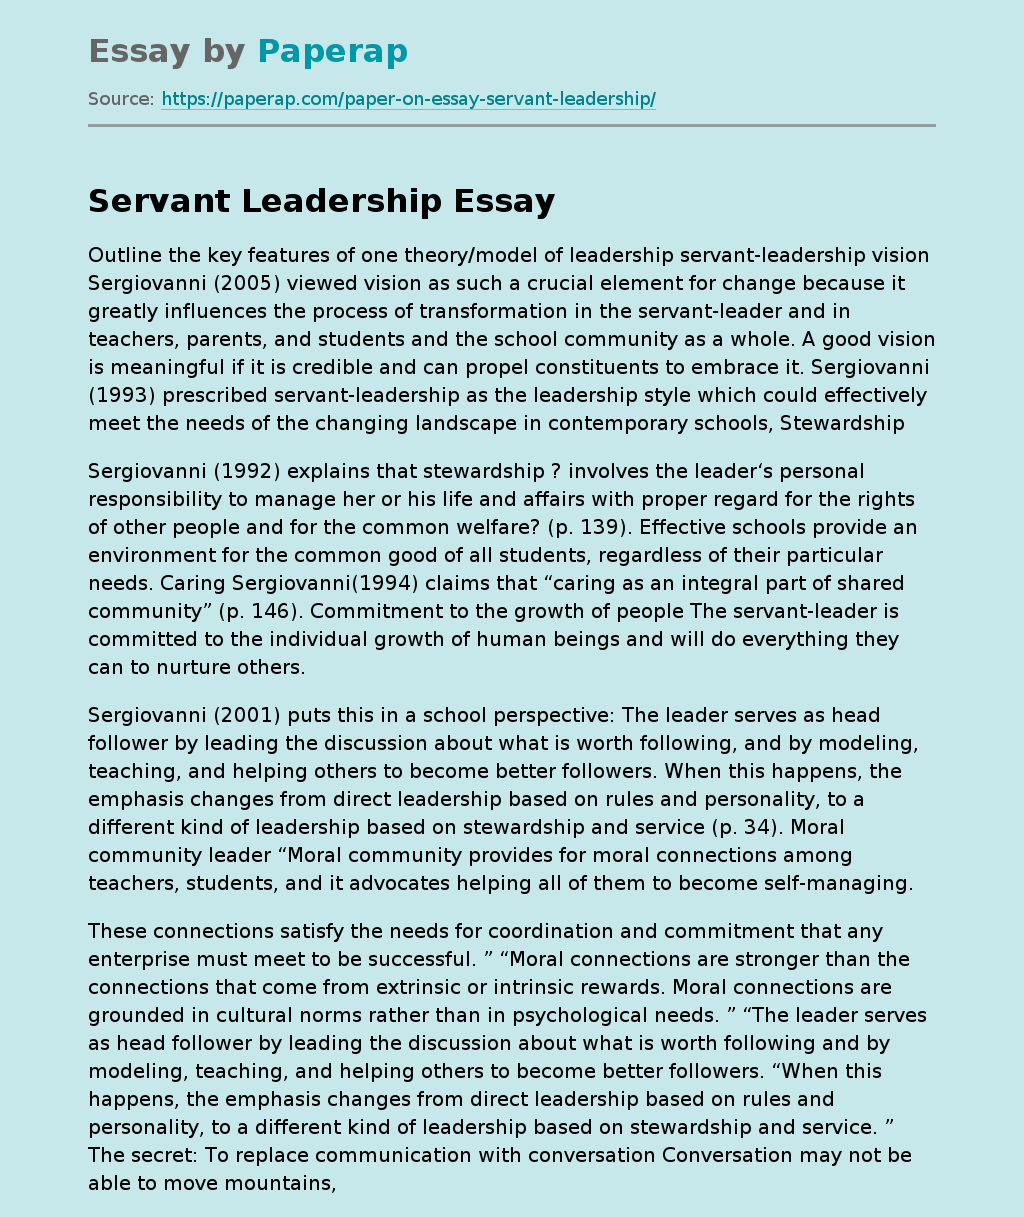 Practice of Servant-Leadership